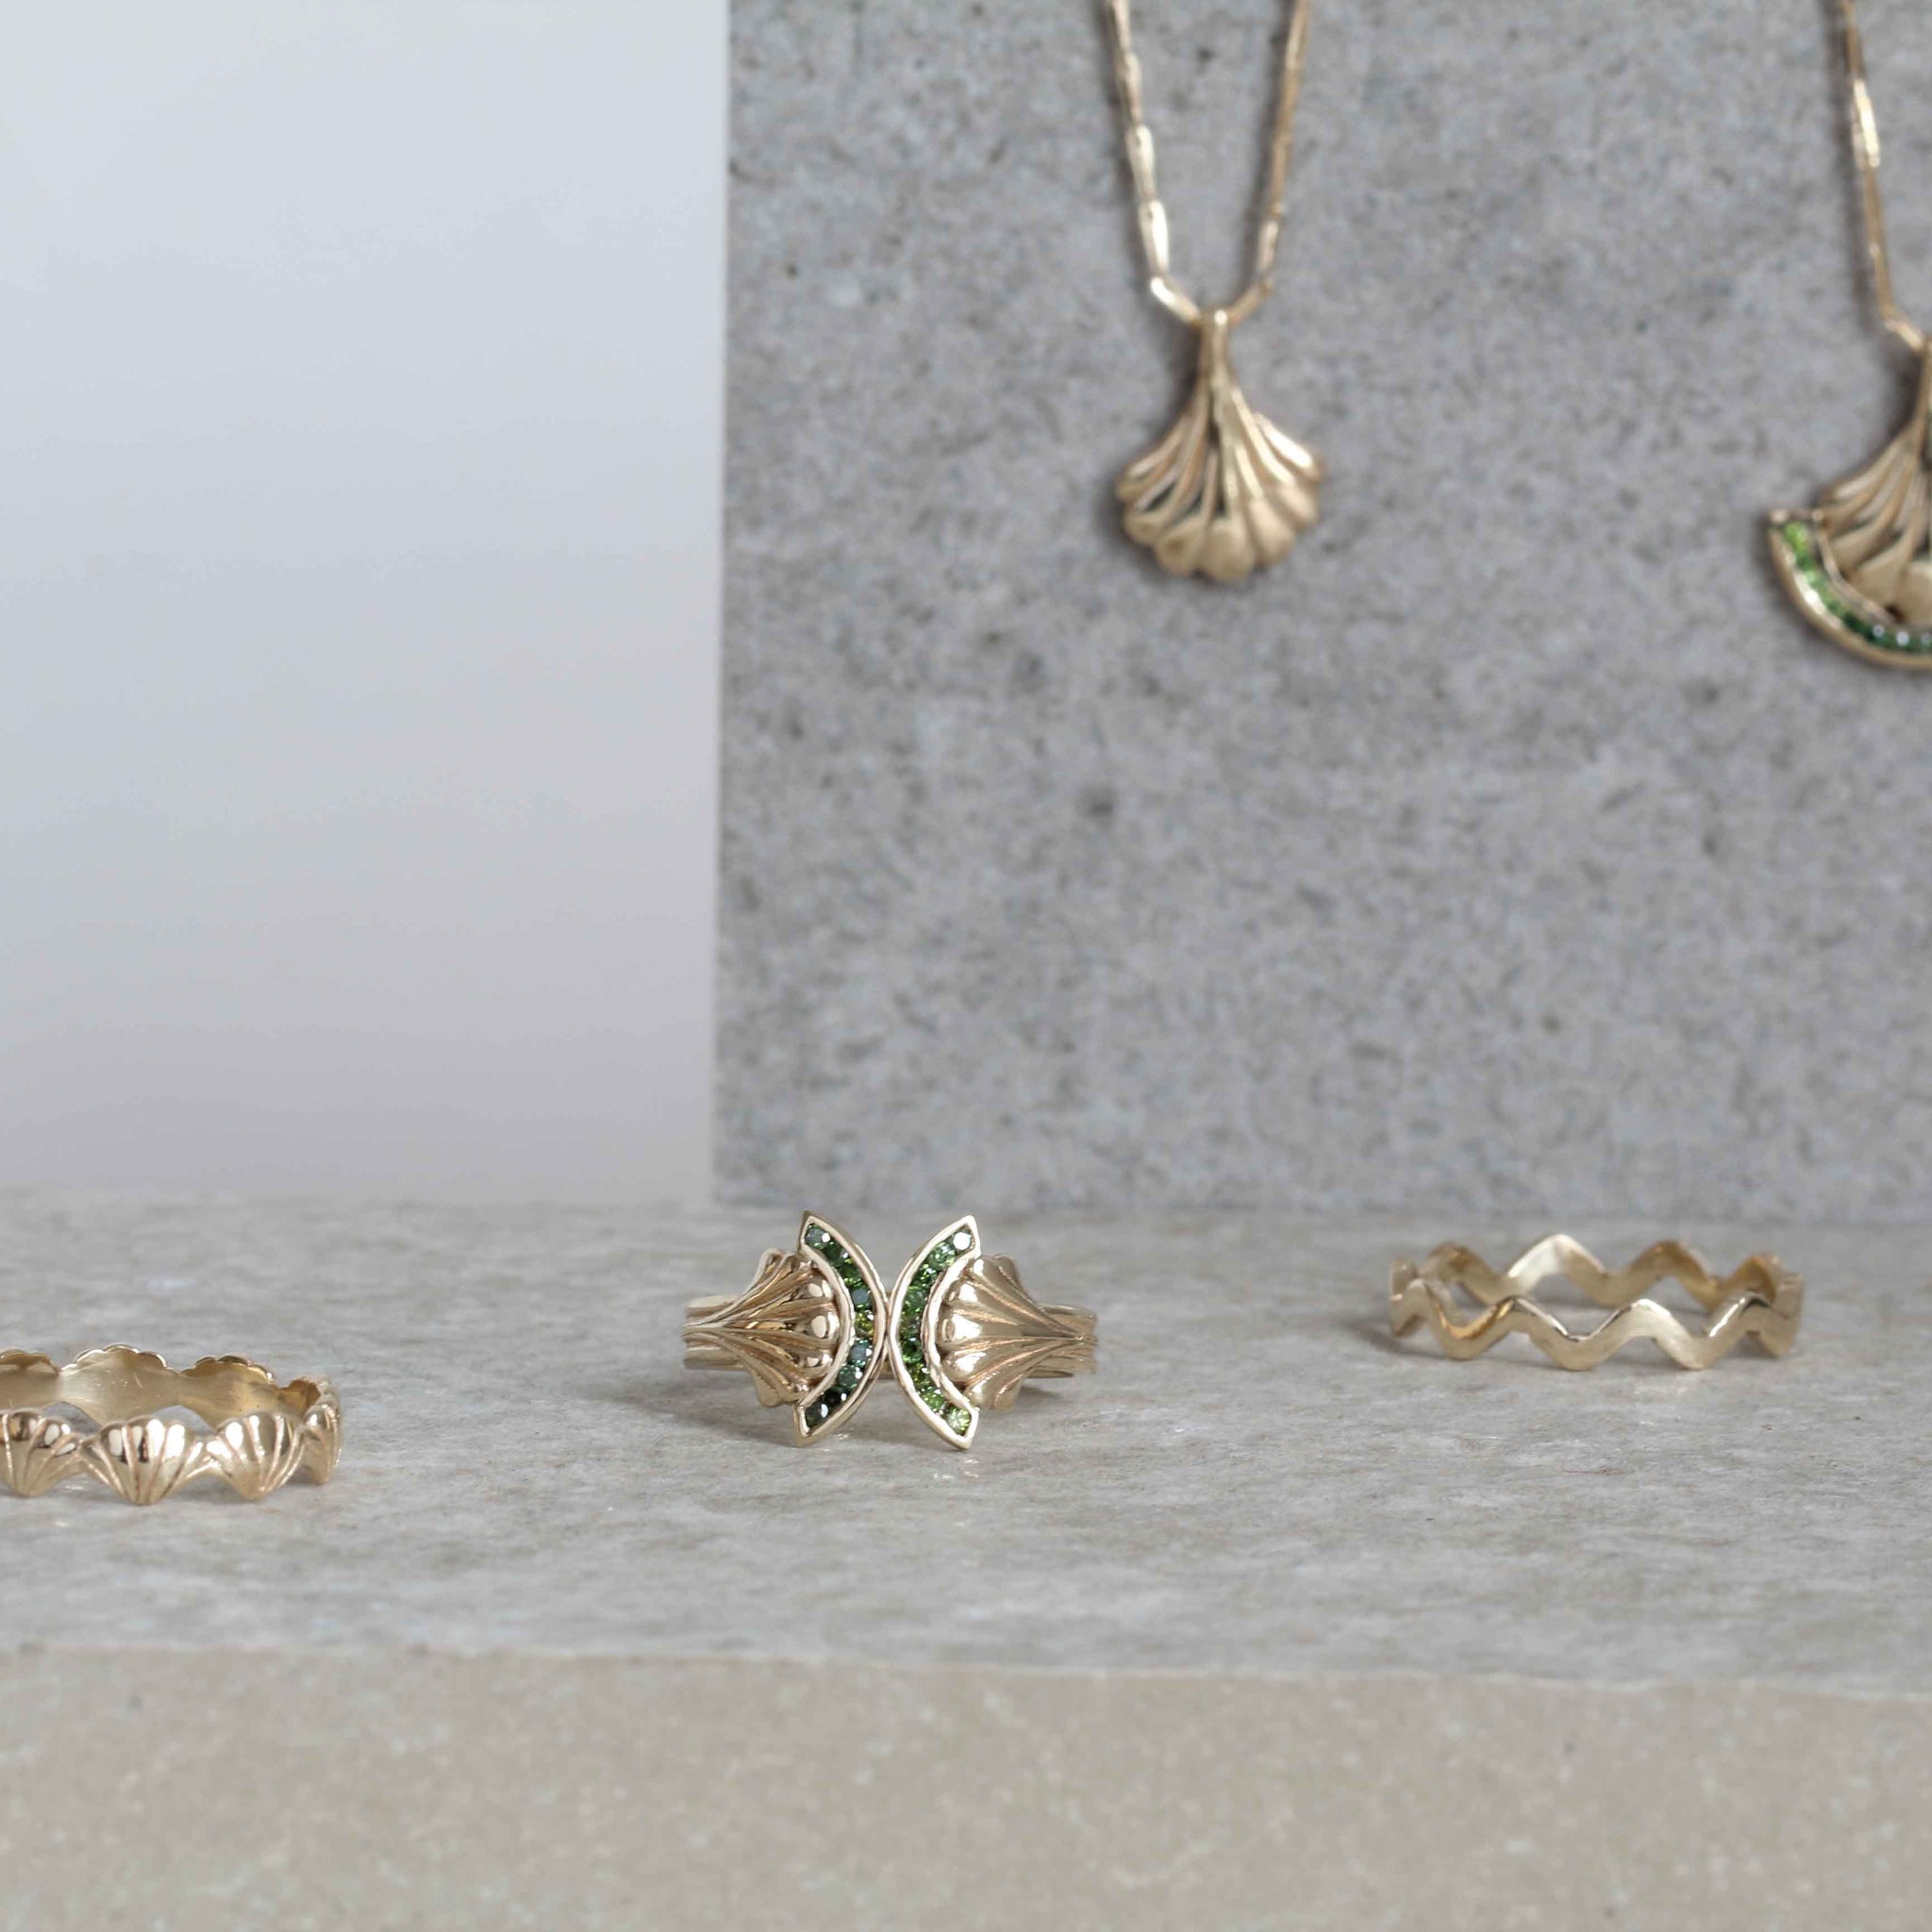 Selection of gold art deco jewellery on limestone slab